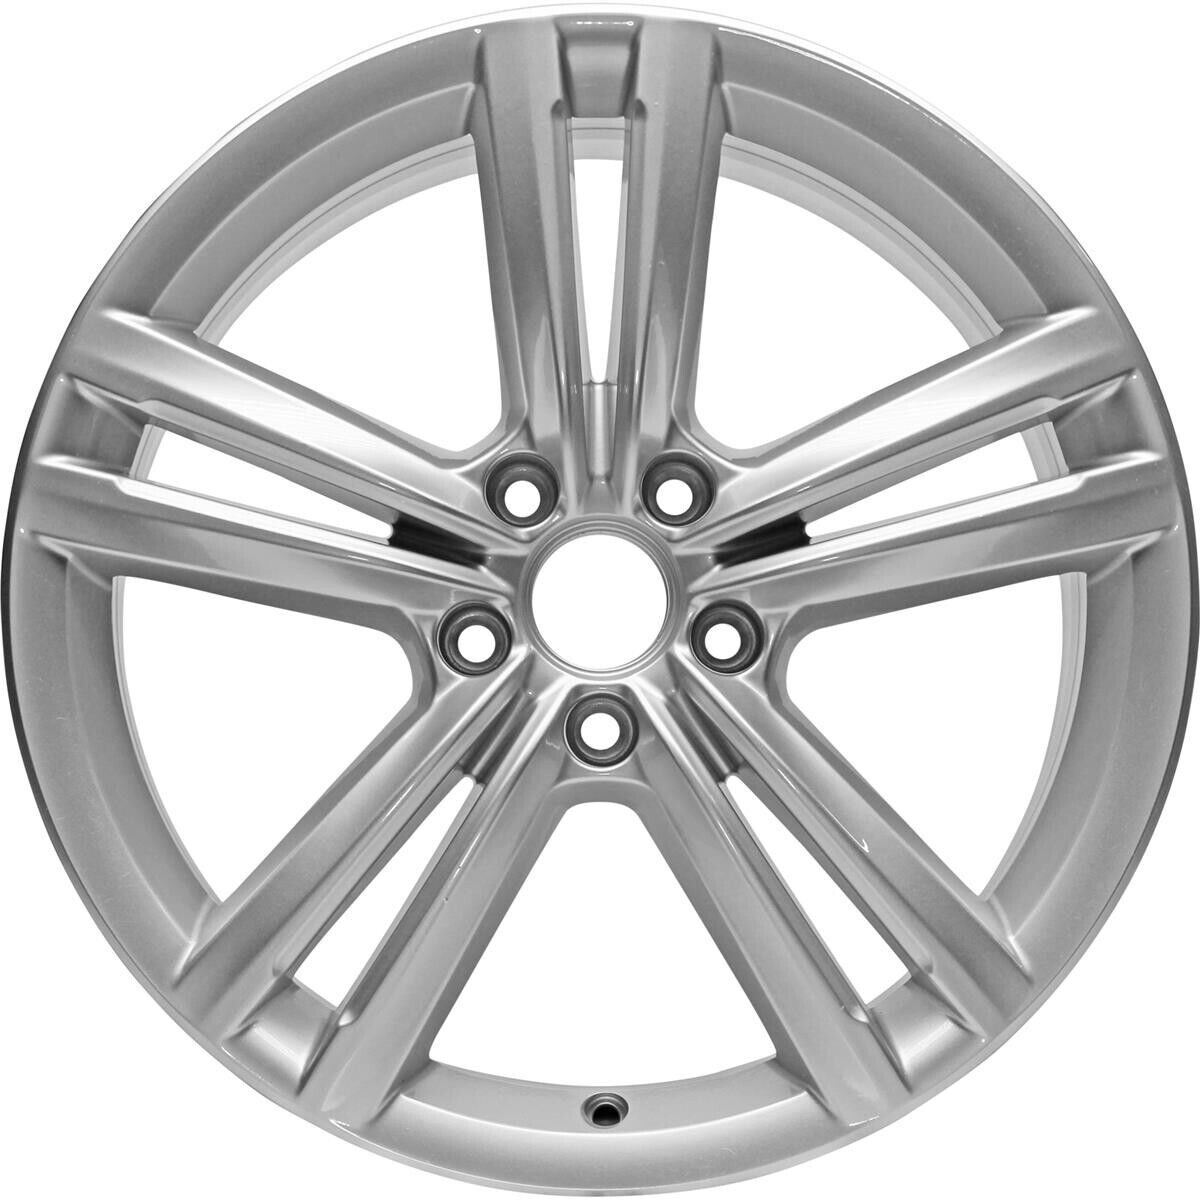 New Alloy Wheel For 2012-2015 Vw Passat 18X8 Inch Silver Rim